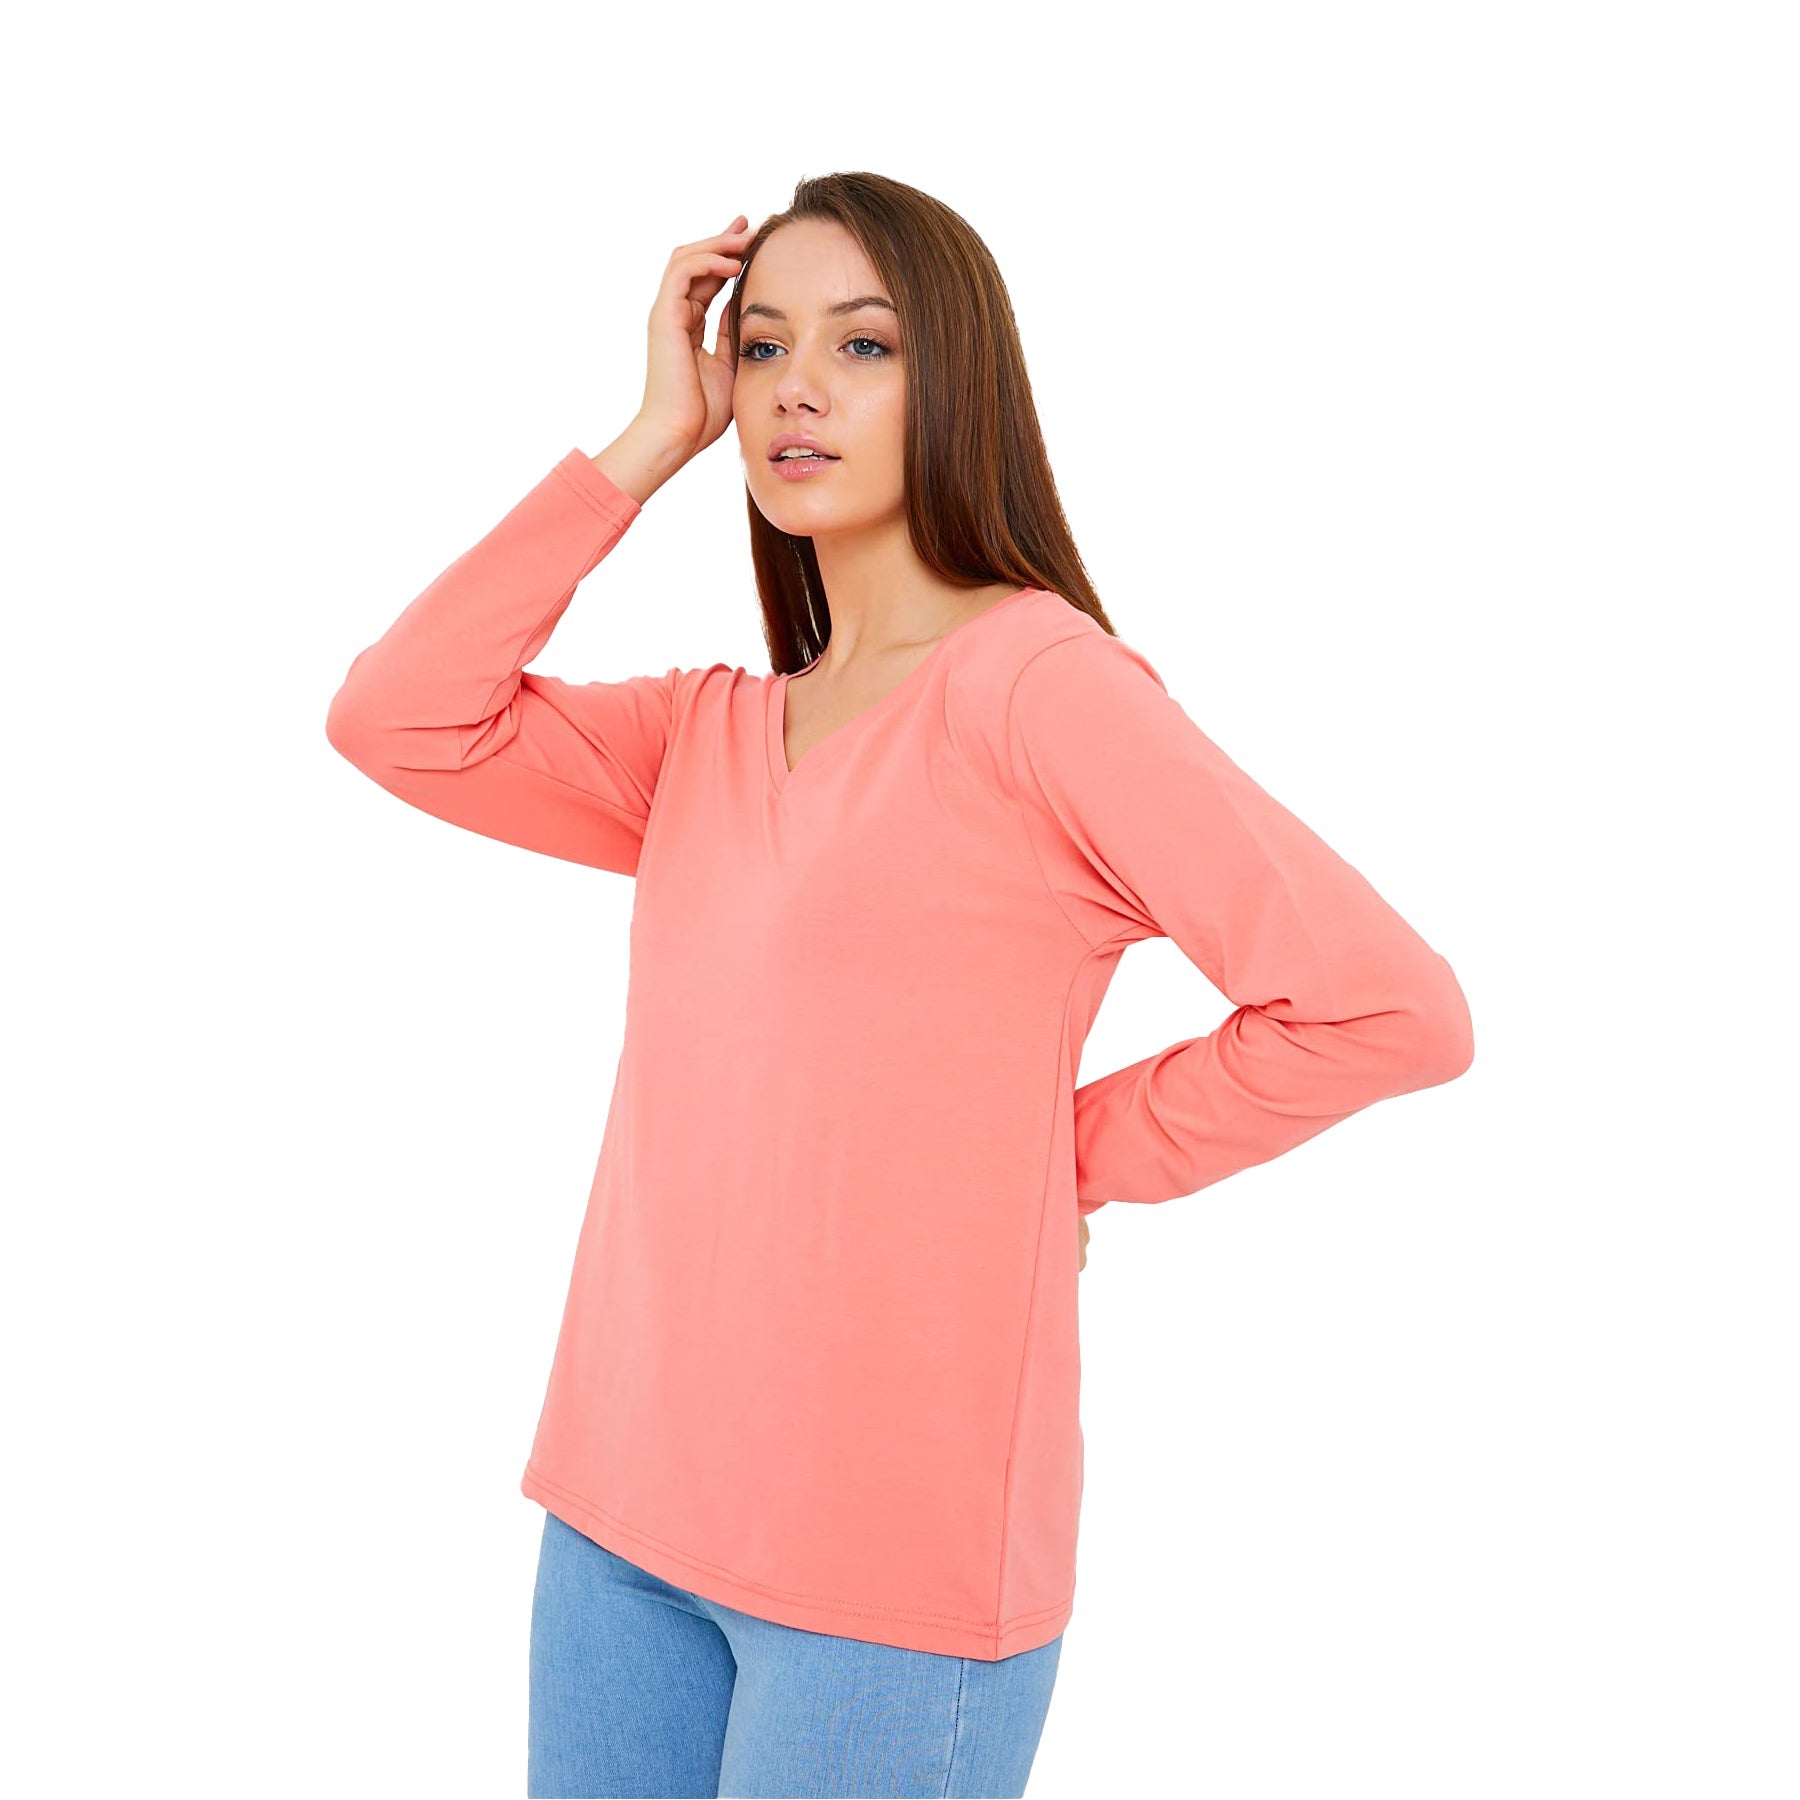 Buy dk-powder Long Sleeve V-Neck Shirts for Women &amp; Girls - Colorful Pima Cotton